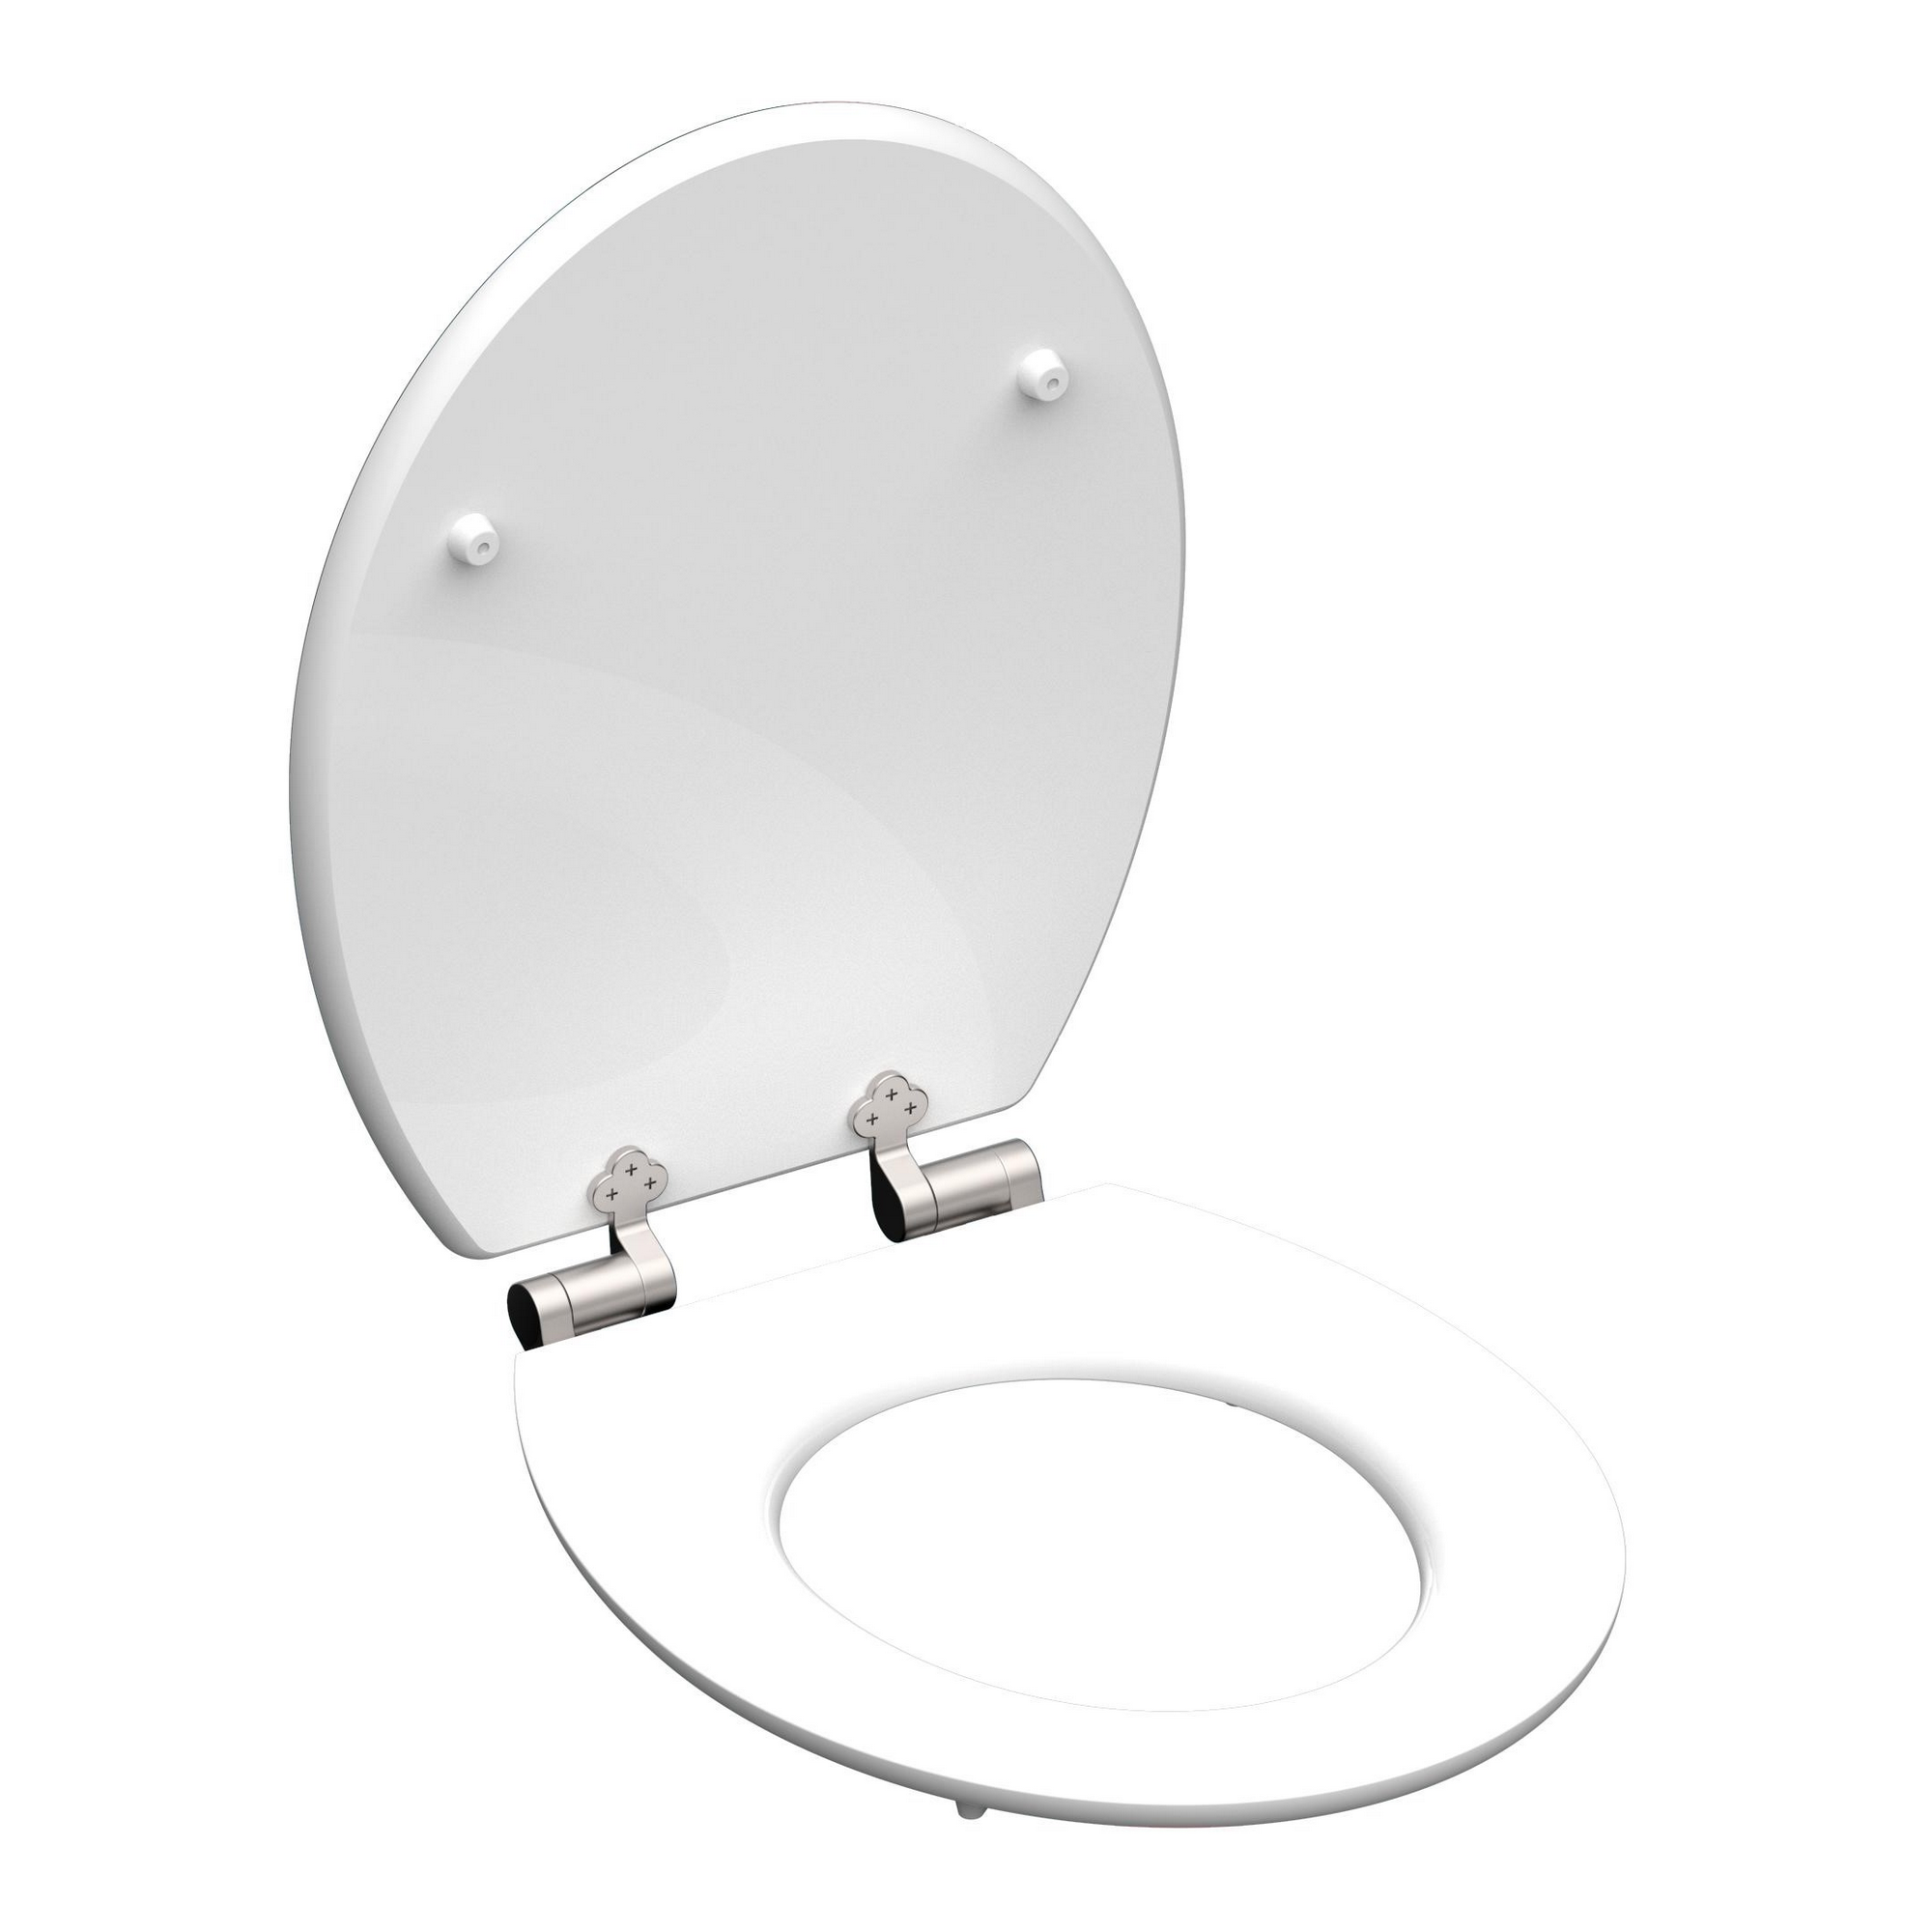 WC-Sitz 'Polar Lights HG' mit Absenkautomatik bunt 37 x 43 cm + product picture